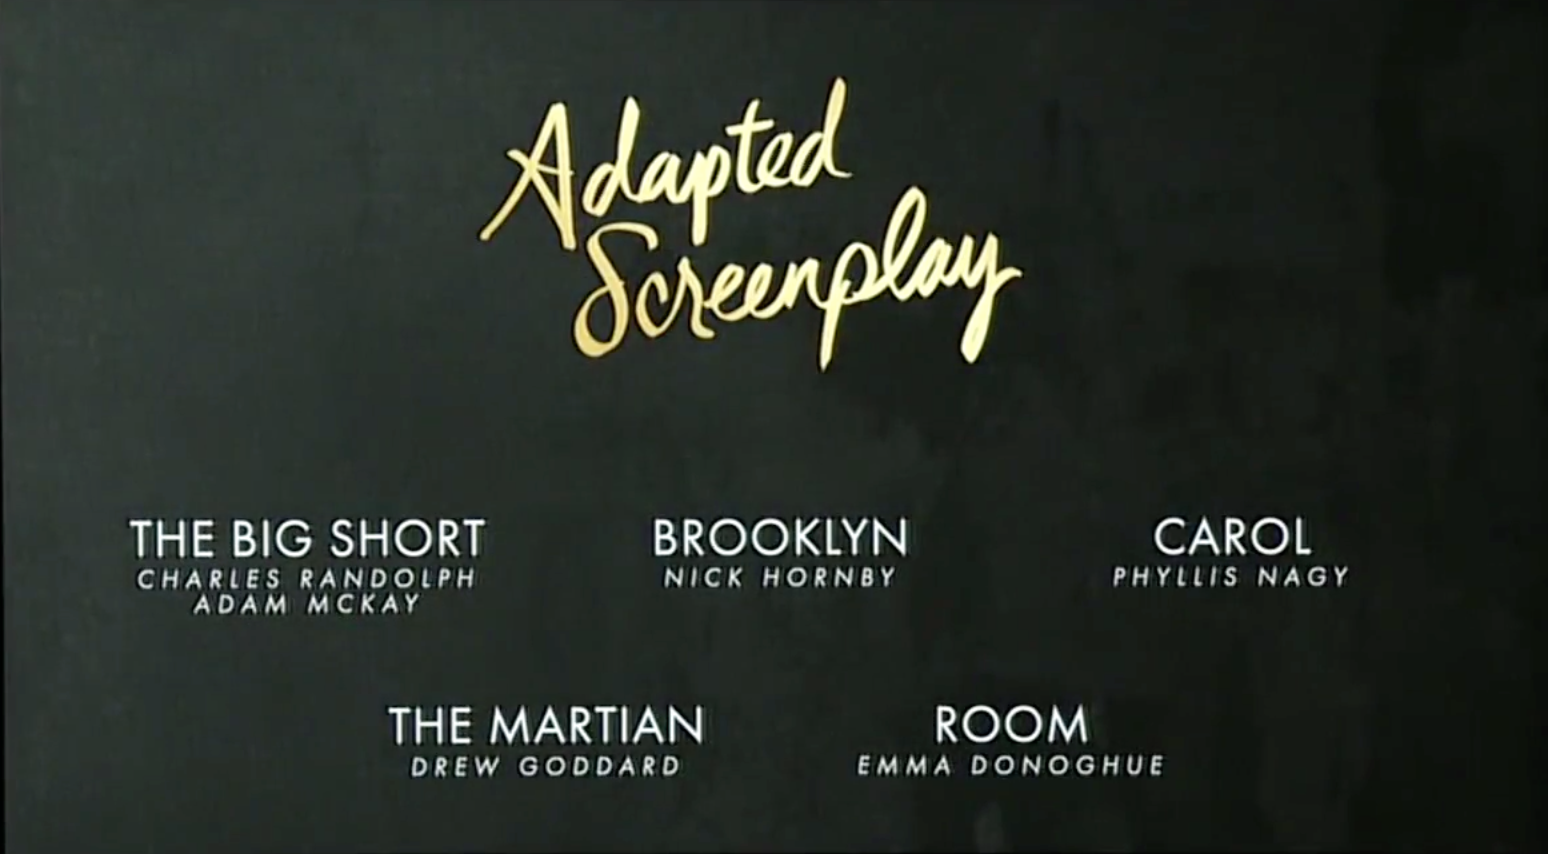 Adapted screenplay, oscars 2016